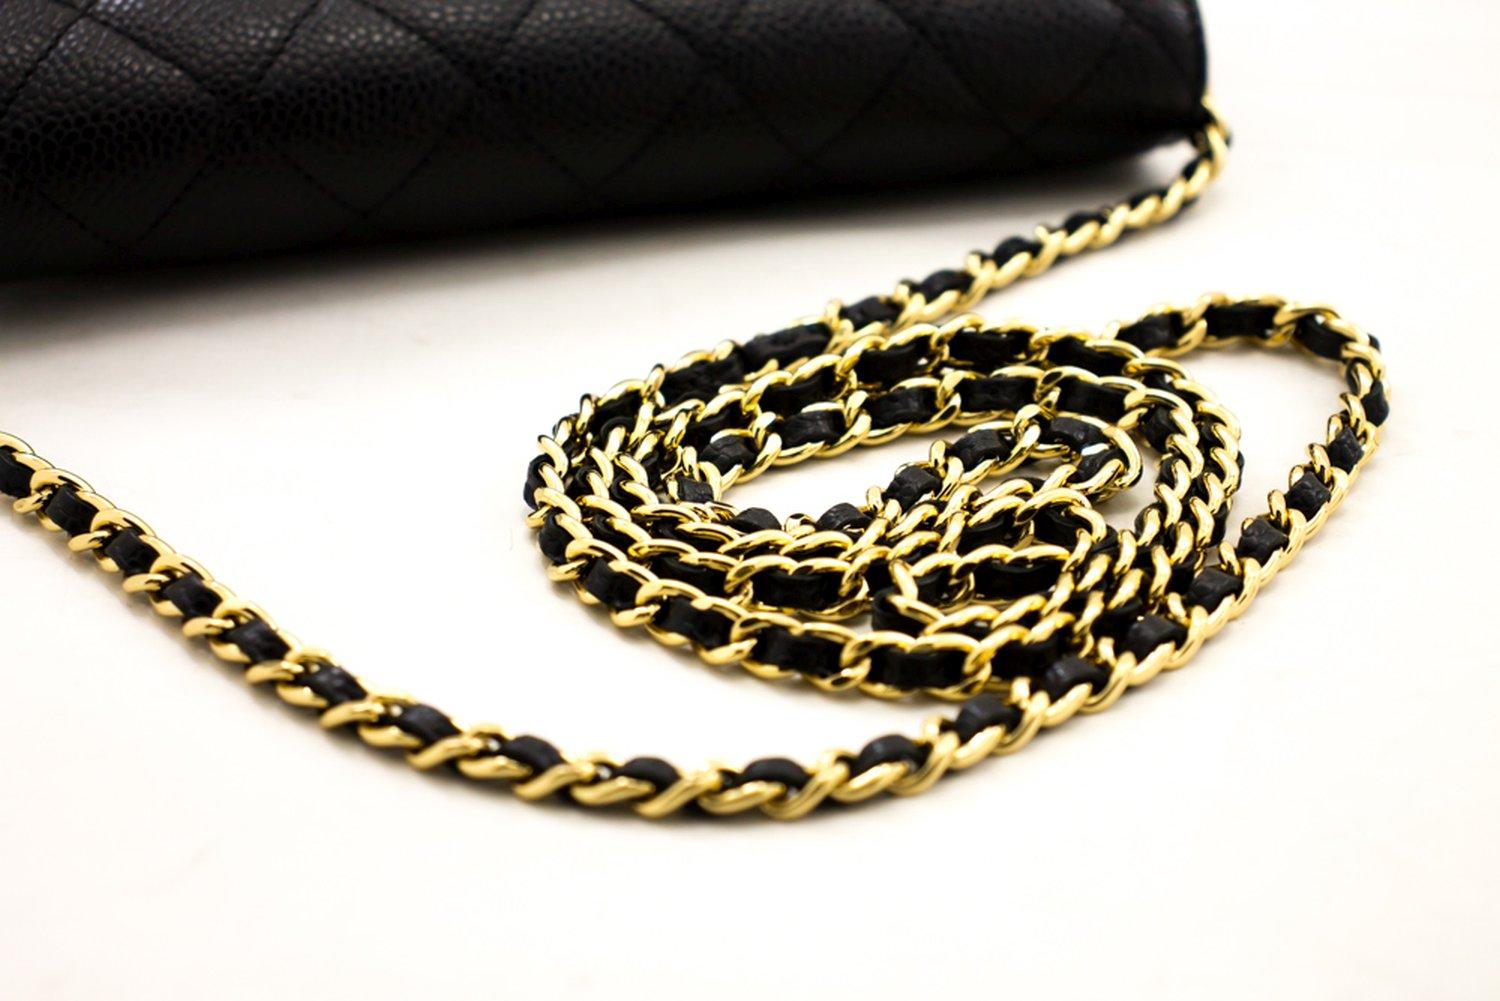 CHANEL Caviar WOC Wallet On Chain Black Shoulder Crossbody Bag 6